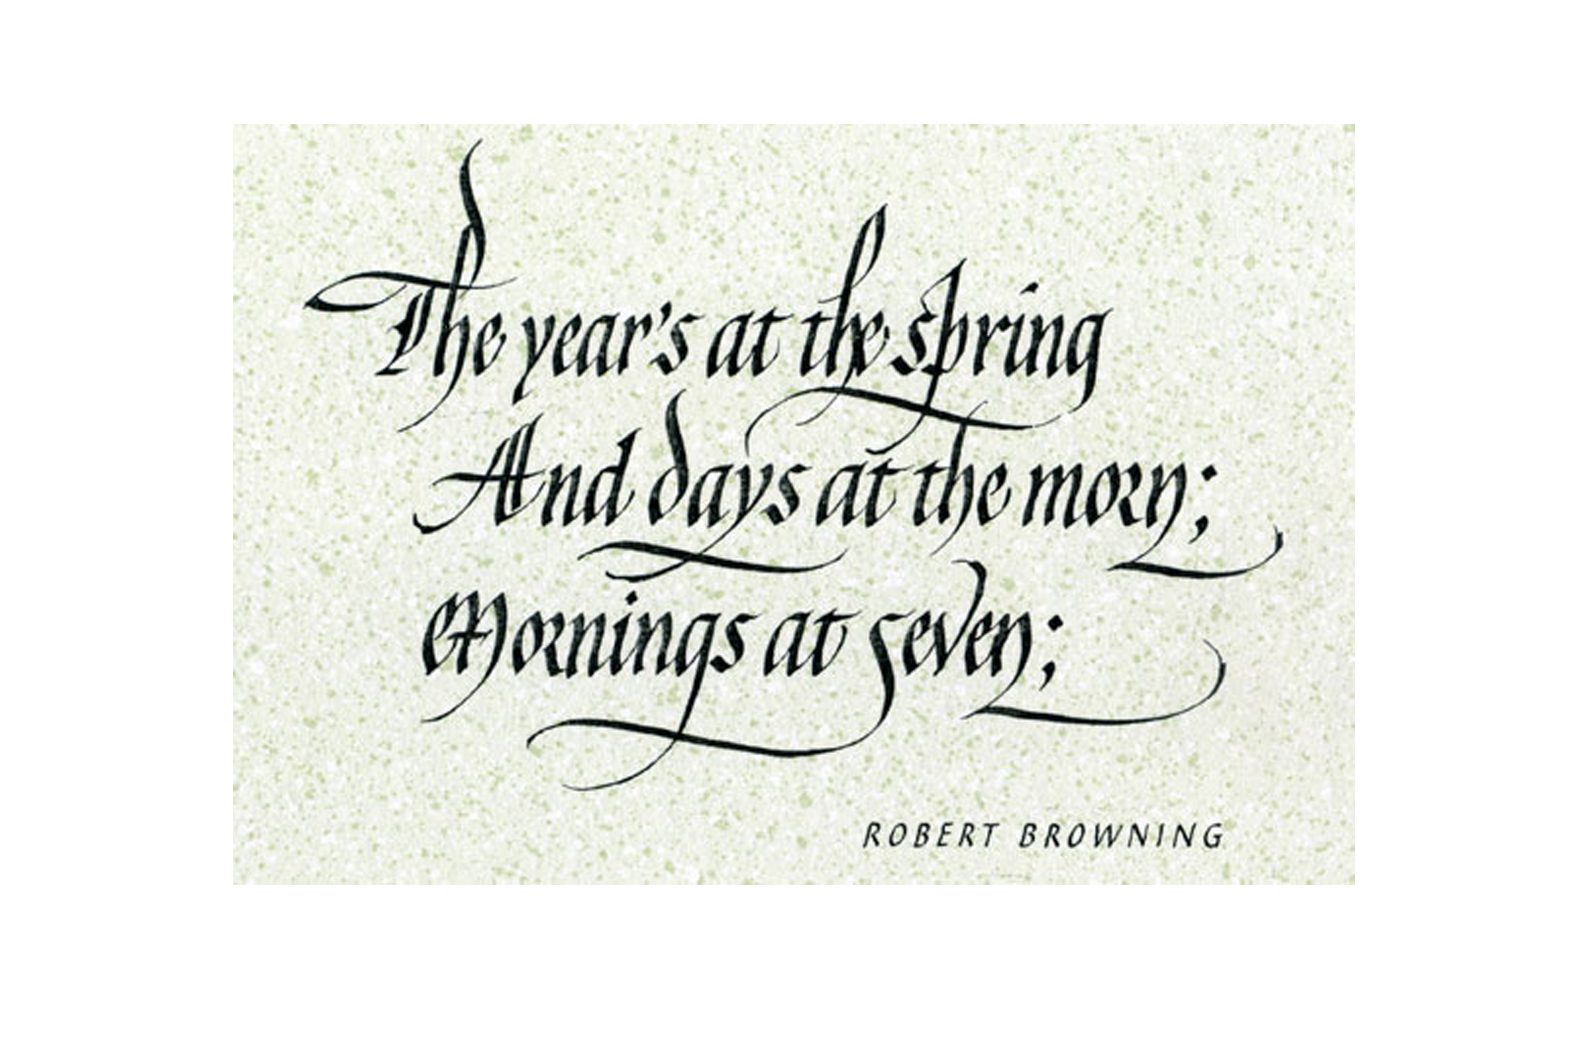 Robert Browning’s word